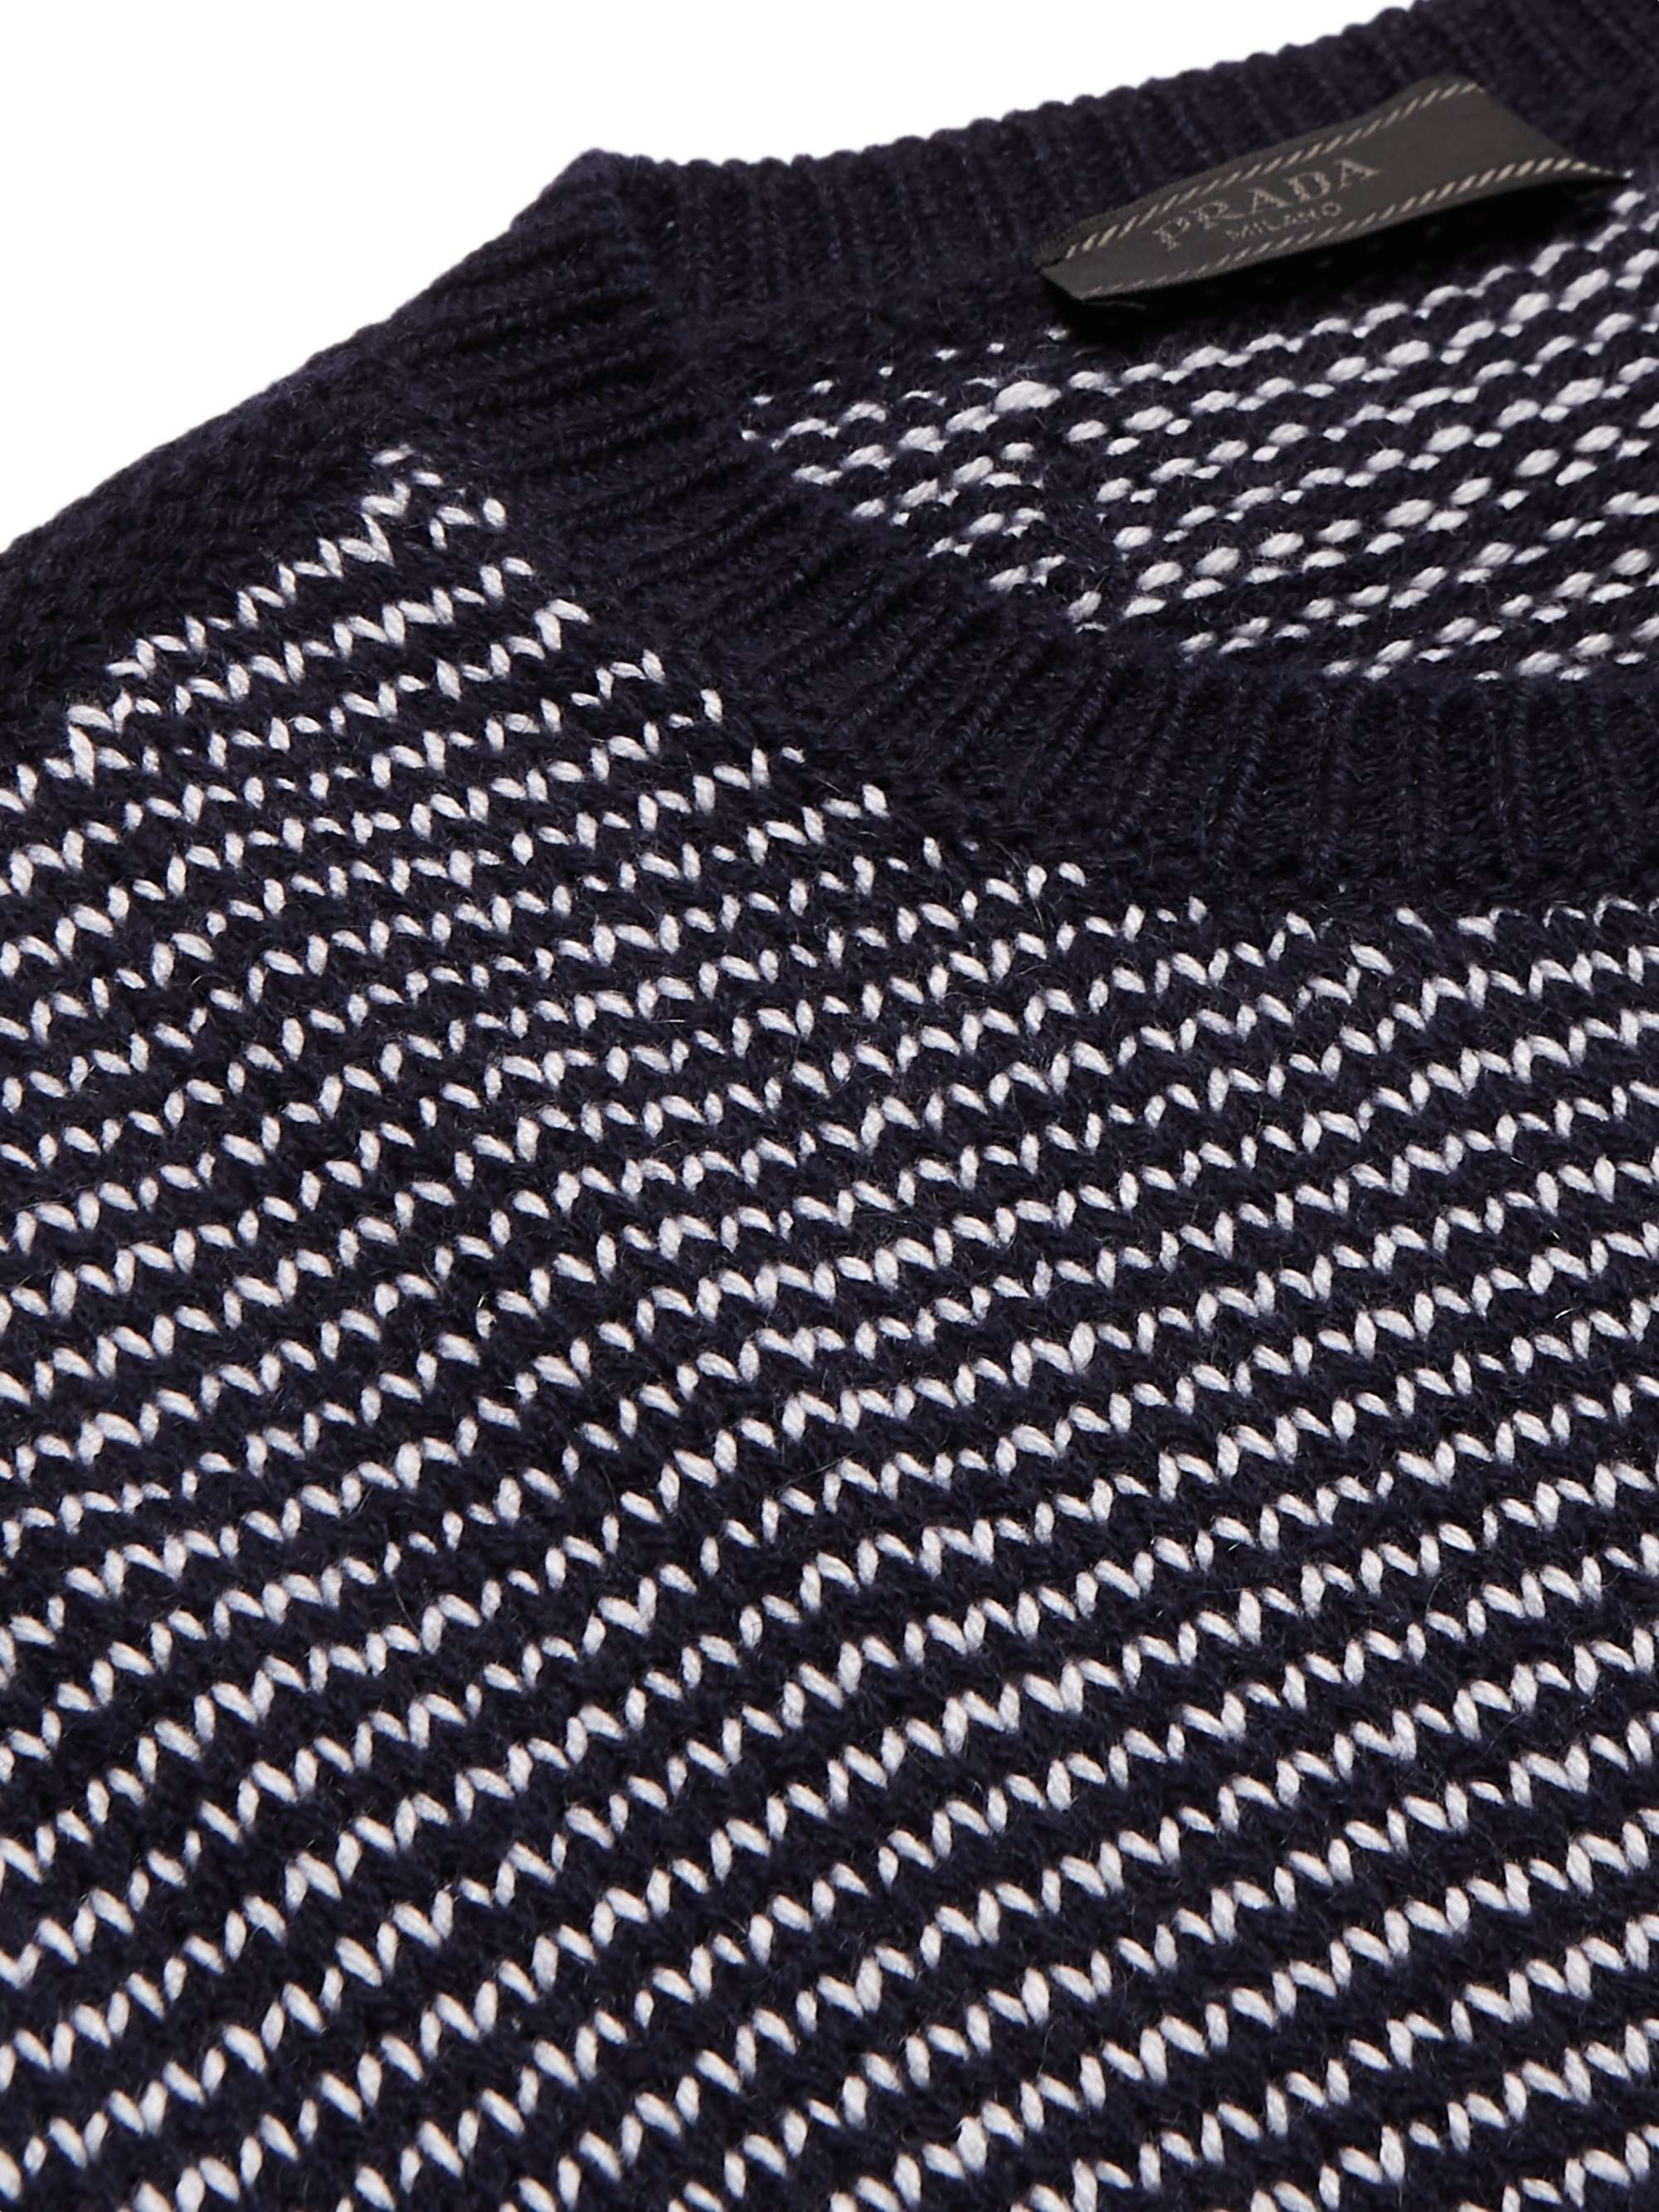 PRADA Striped Cashmere Sweater